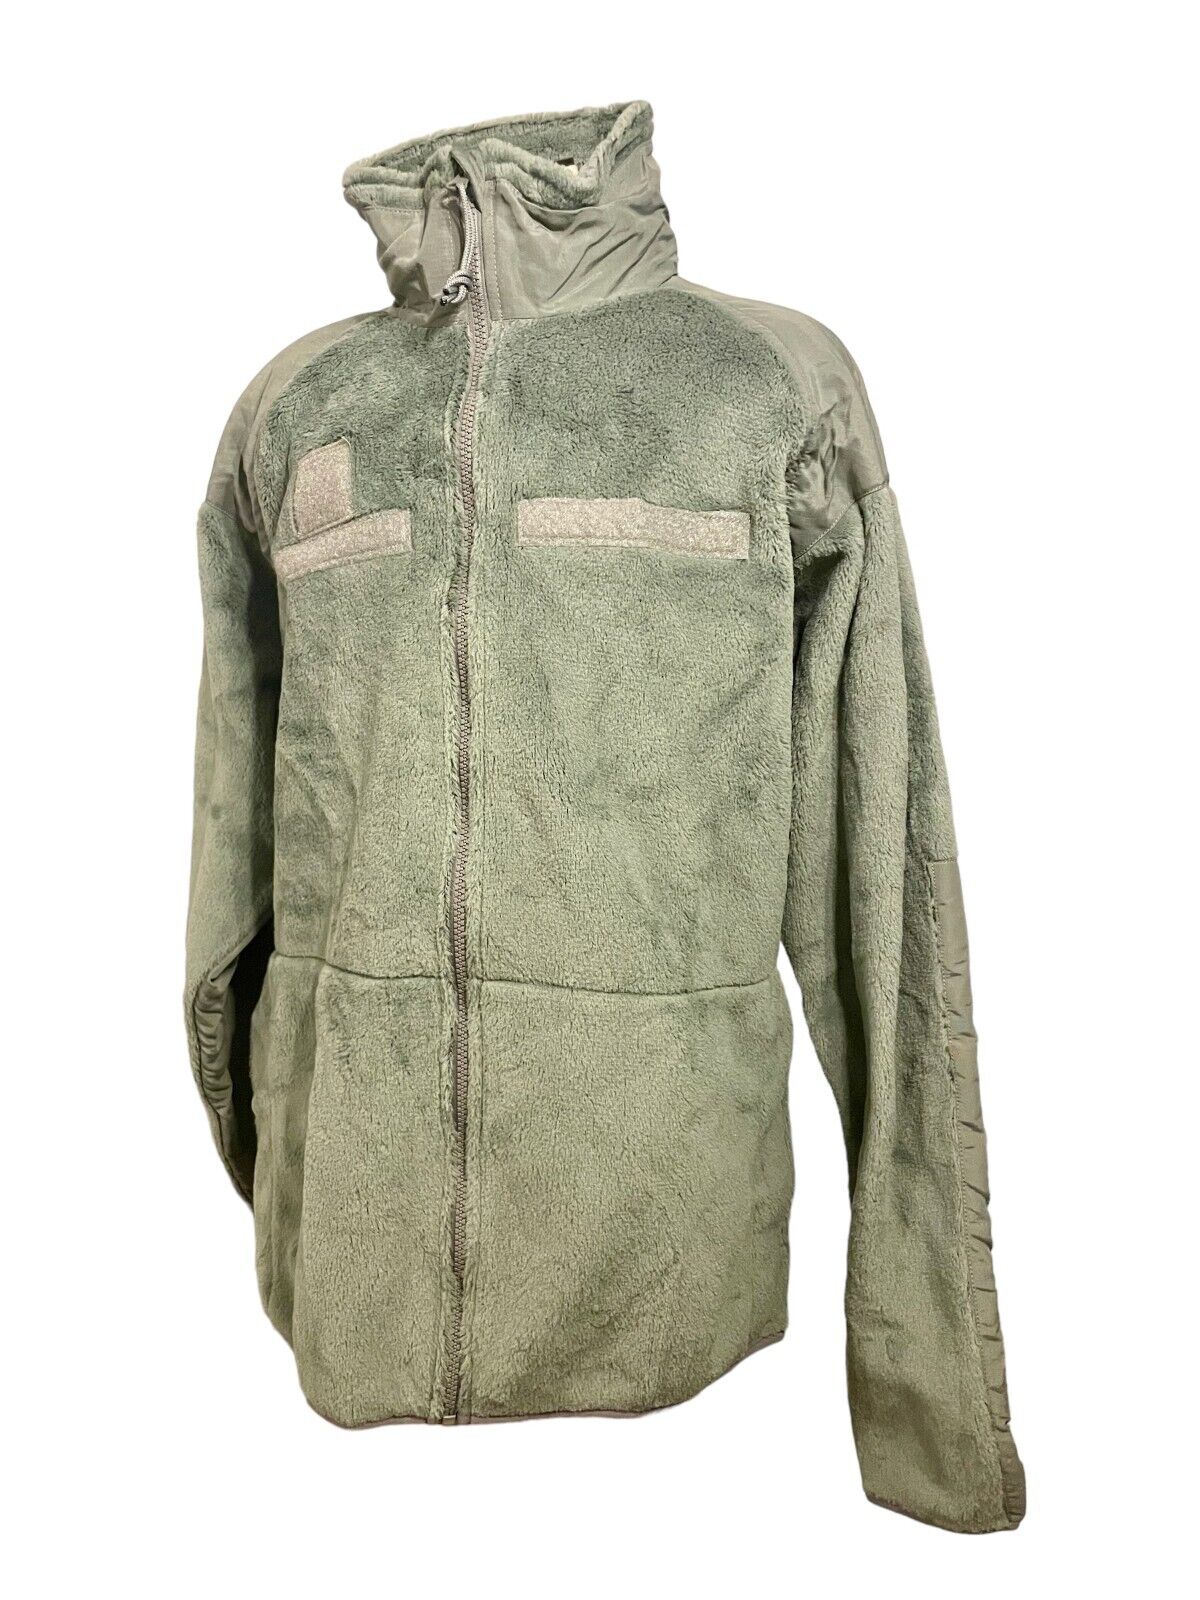 ECWCS GEN III Level 3 Jacket Cold Weather Polartec Foliage Green Medium Long EXC